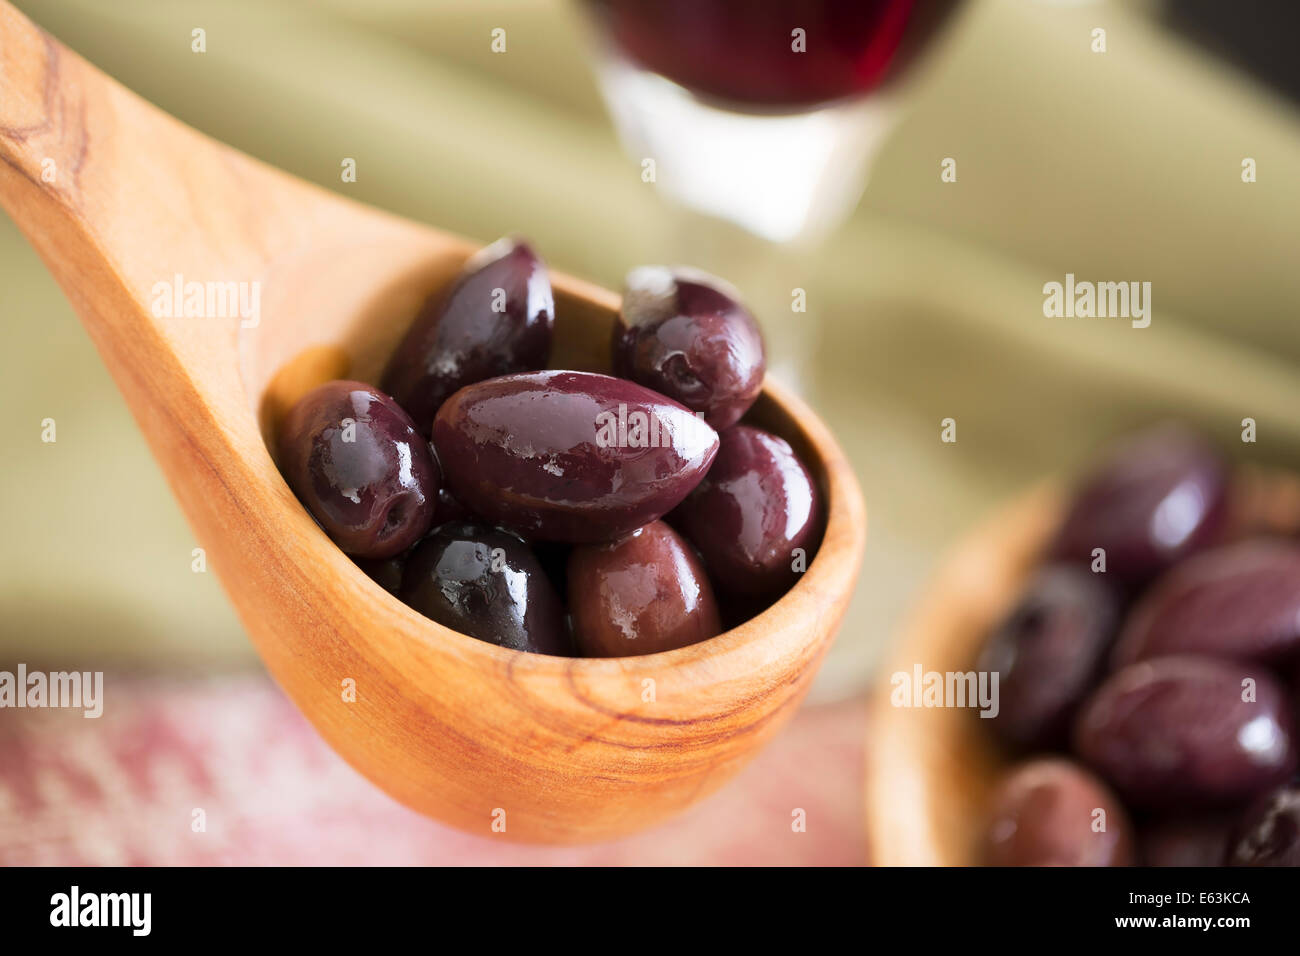 Wooden scoop of kalamata olives. Stock Photo